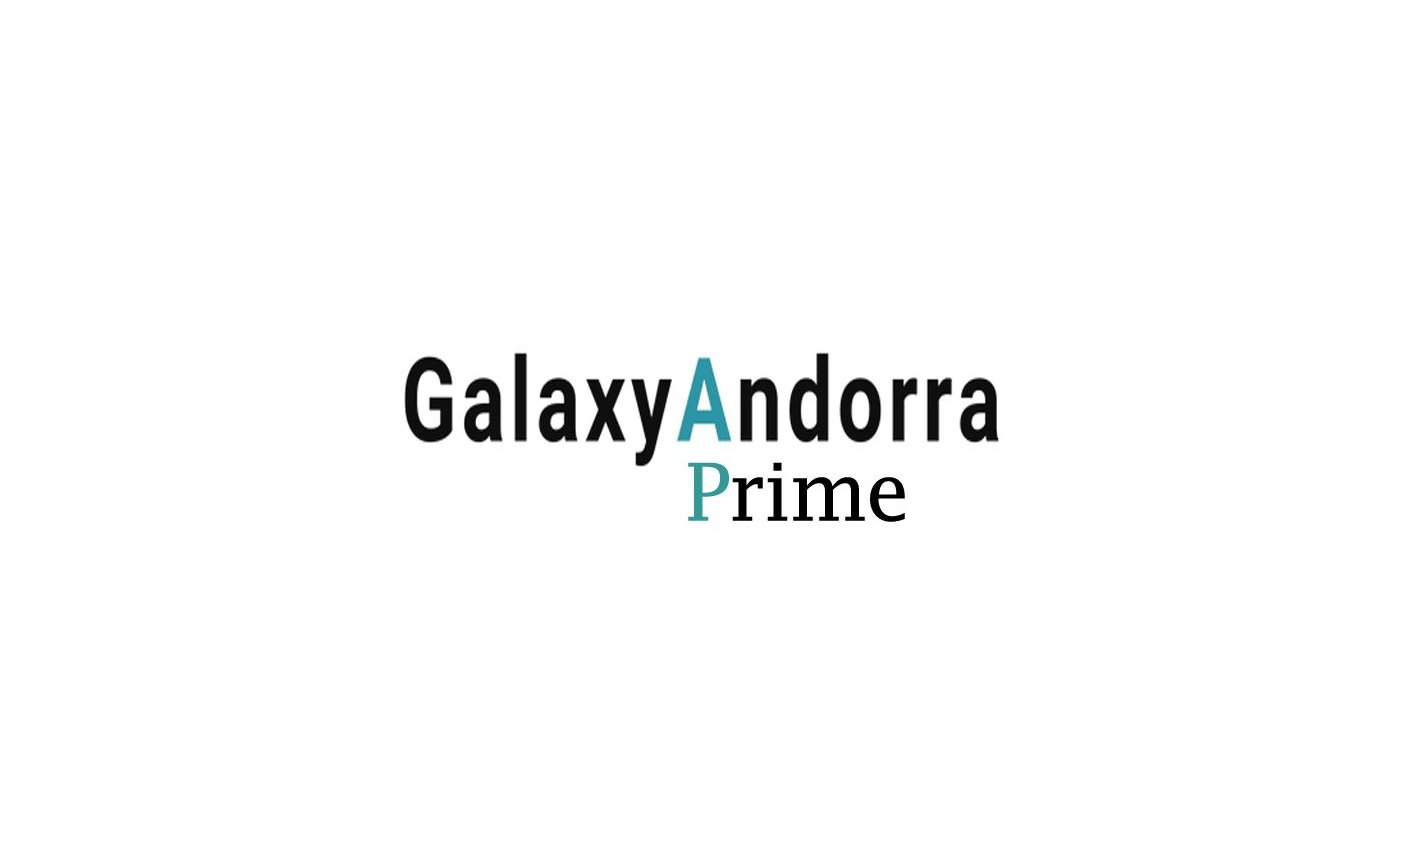 Galaxyandorra Prime